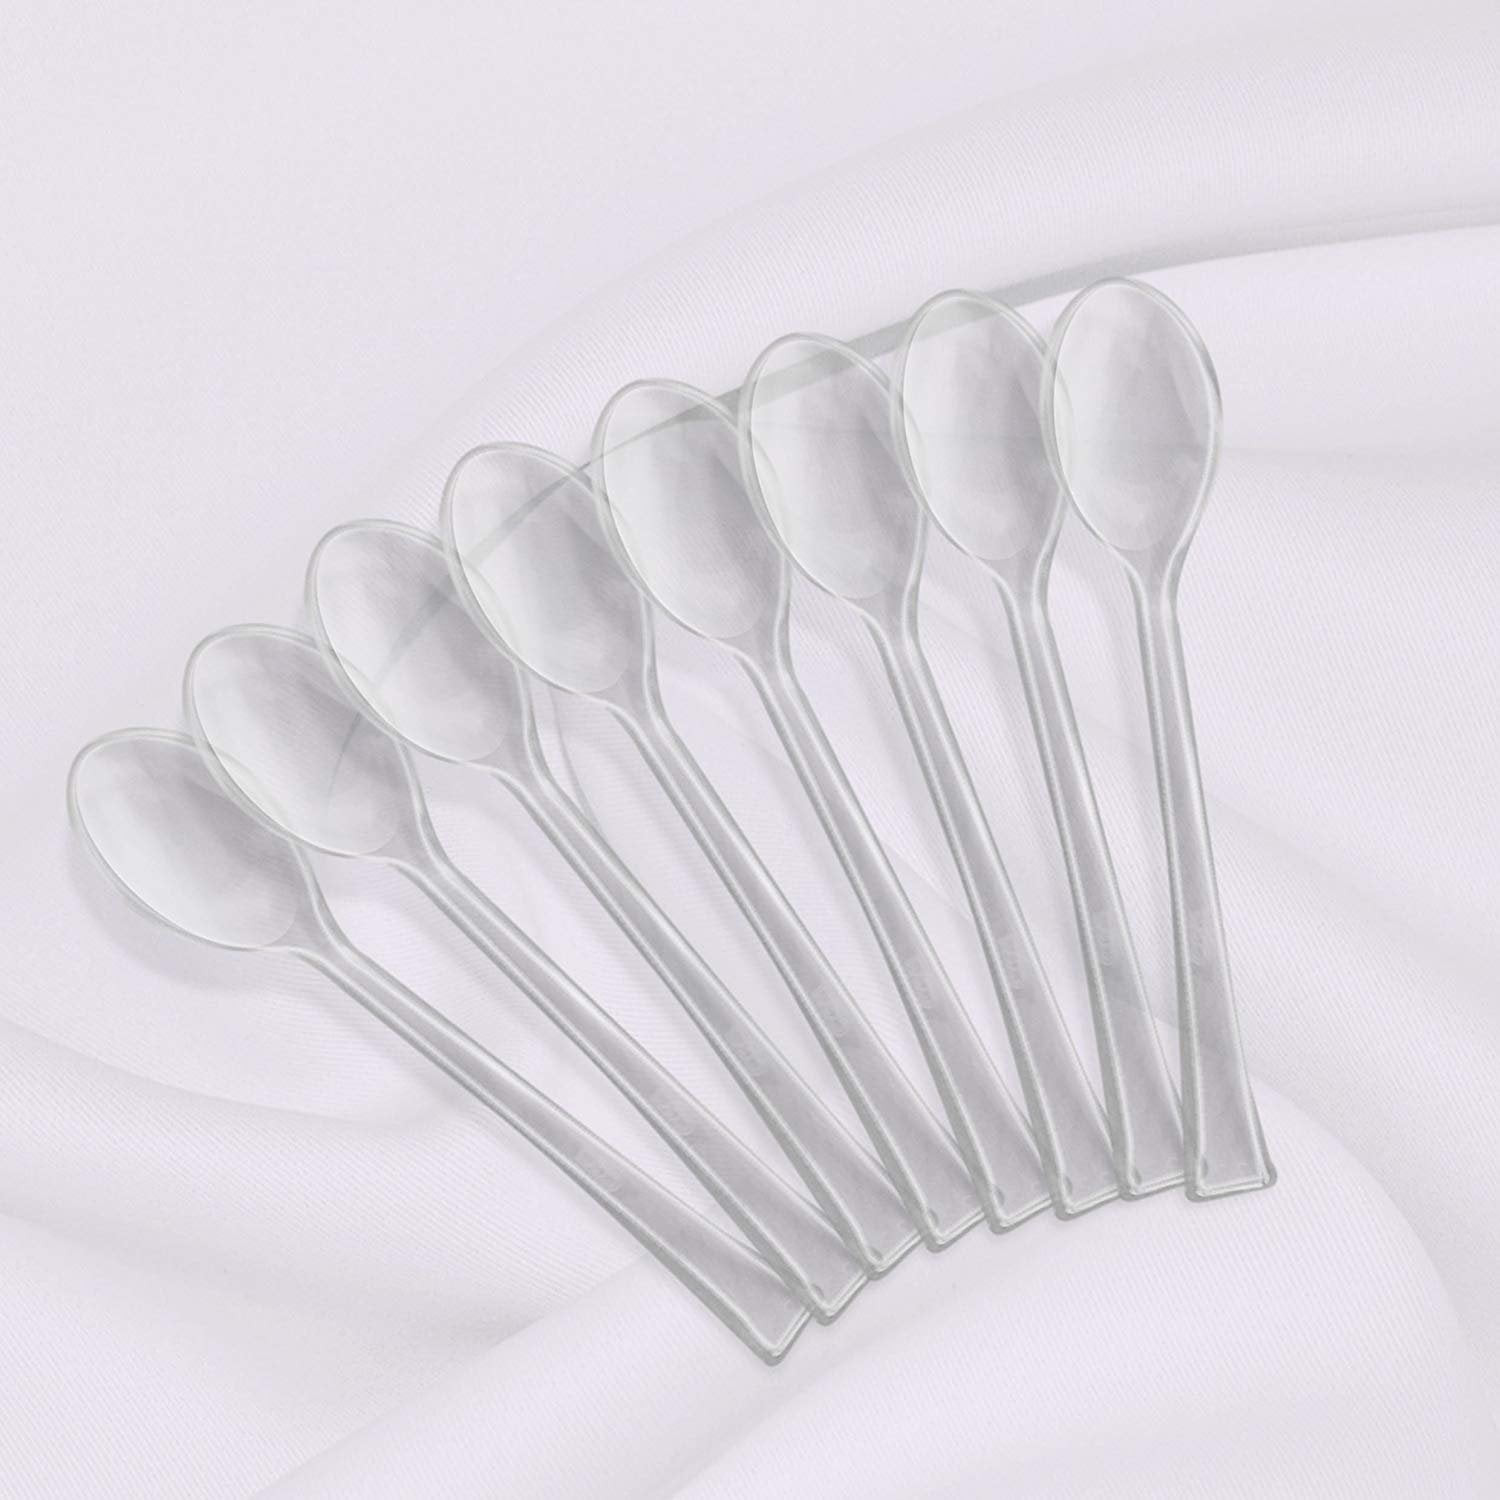 ORYOUGO 50 Pack Mini Clear Plastic Spoon Disposable Flatware Dessert/Appetizer Spoons,4.2 